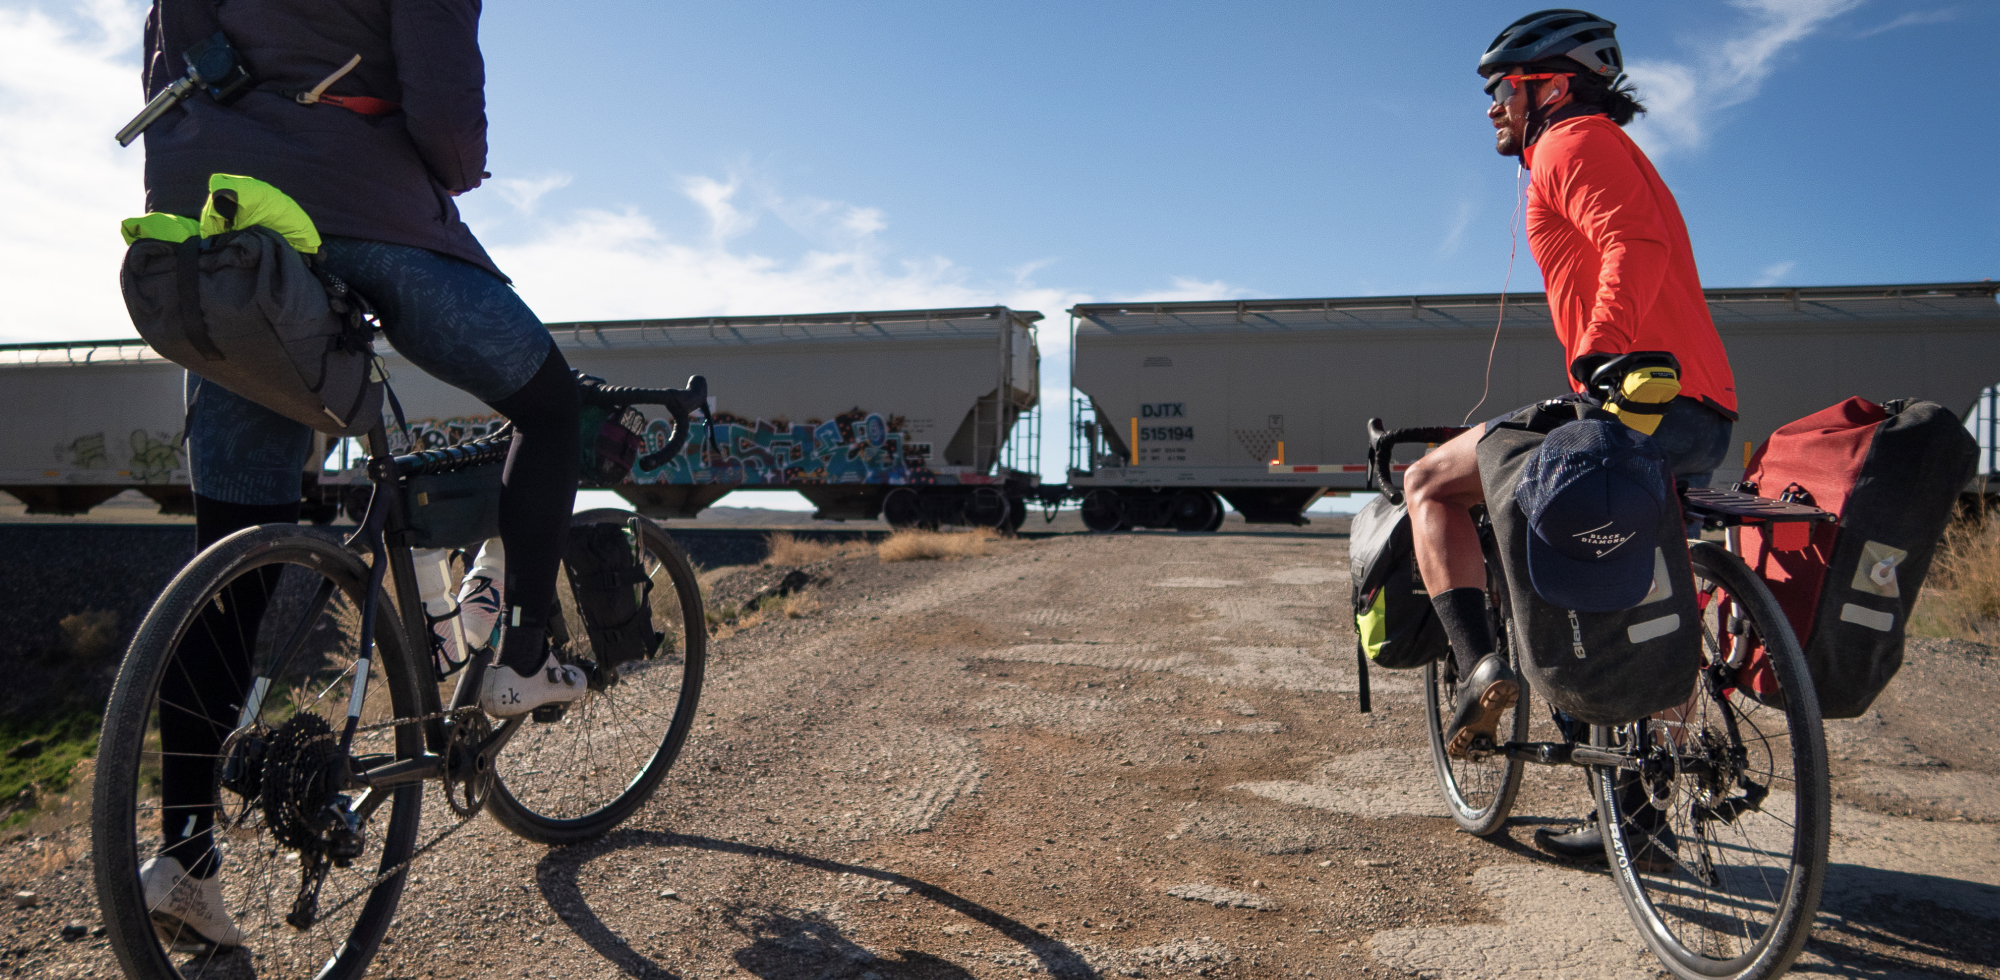 BIKEPACKING BAGS VS TOURING RACKS WITH PANNIERS - bikepackers waiting at railway line